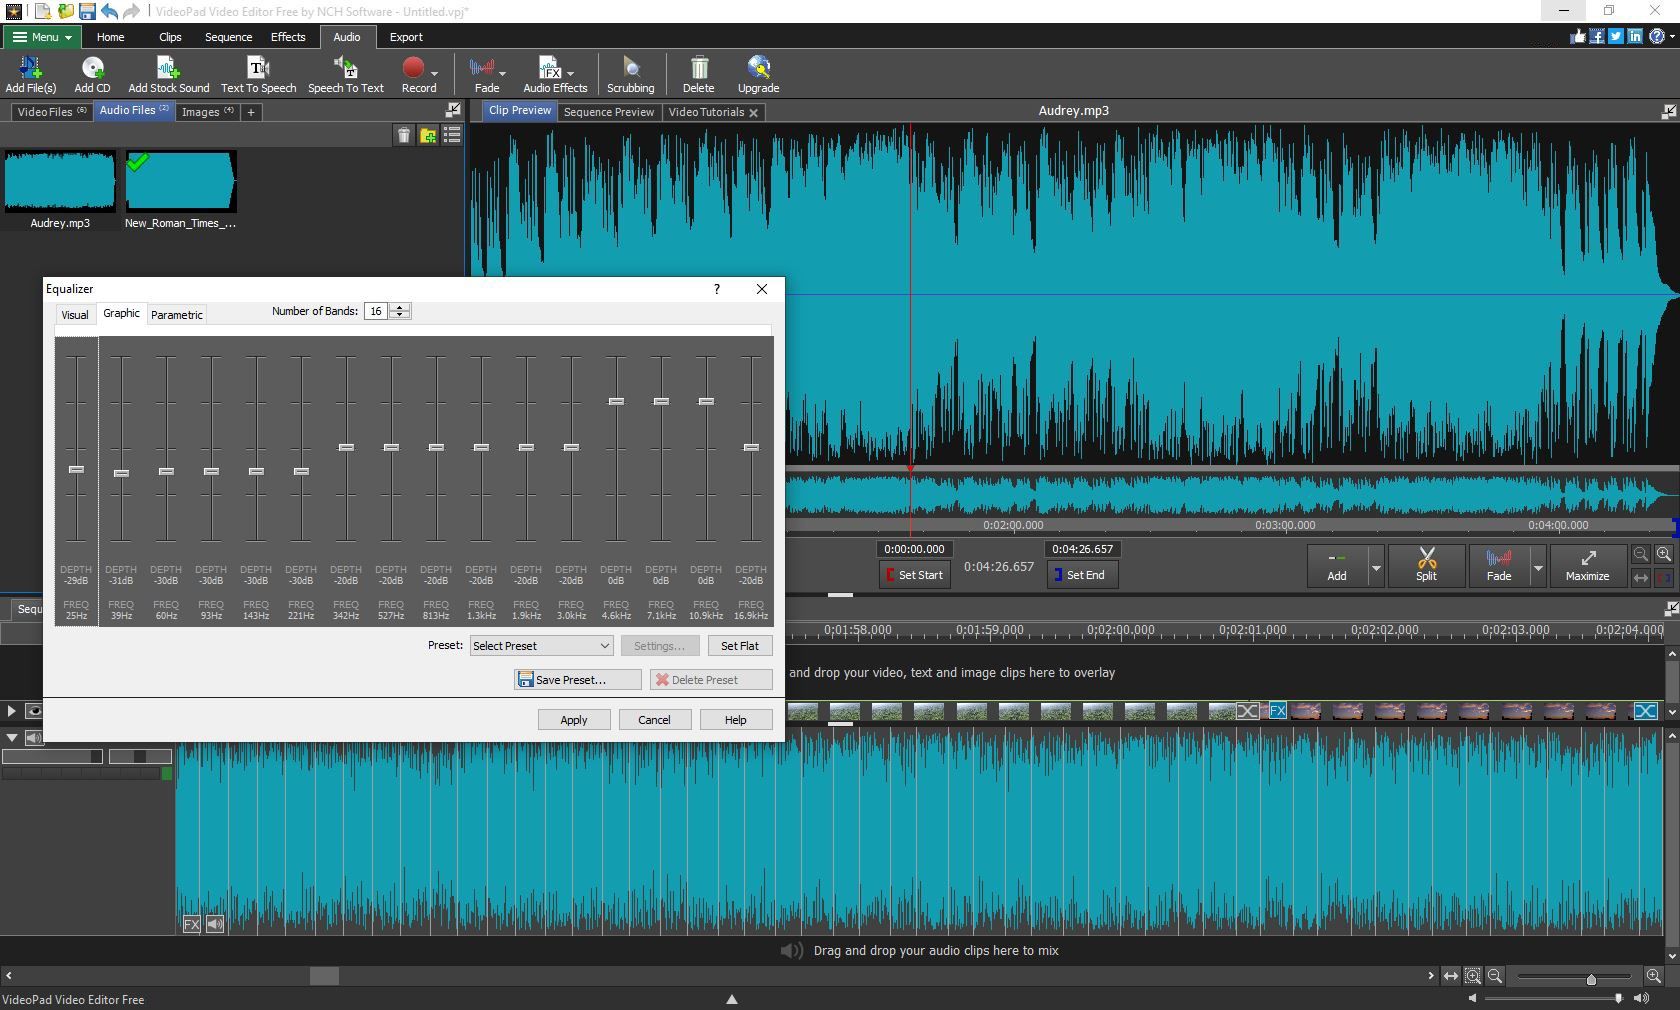 Edit your audio with amazing audio tools